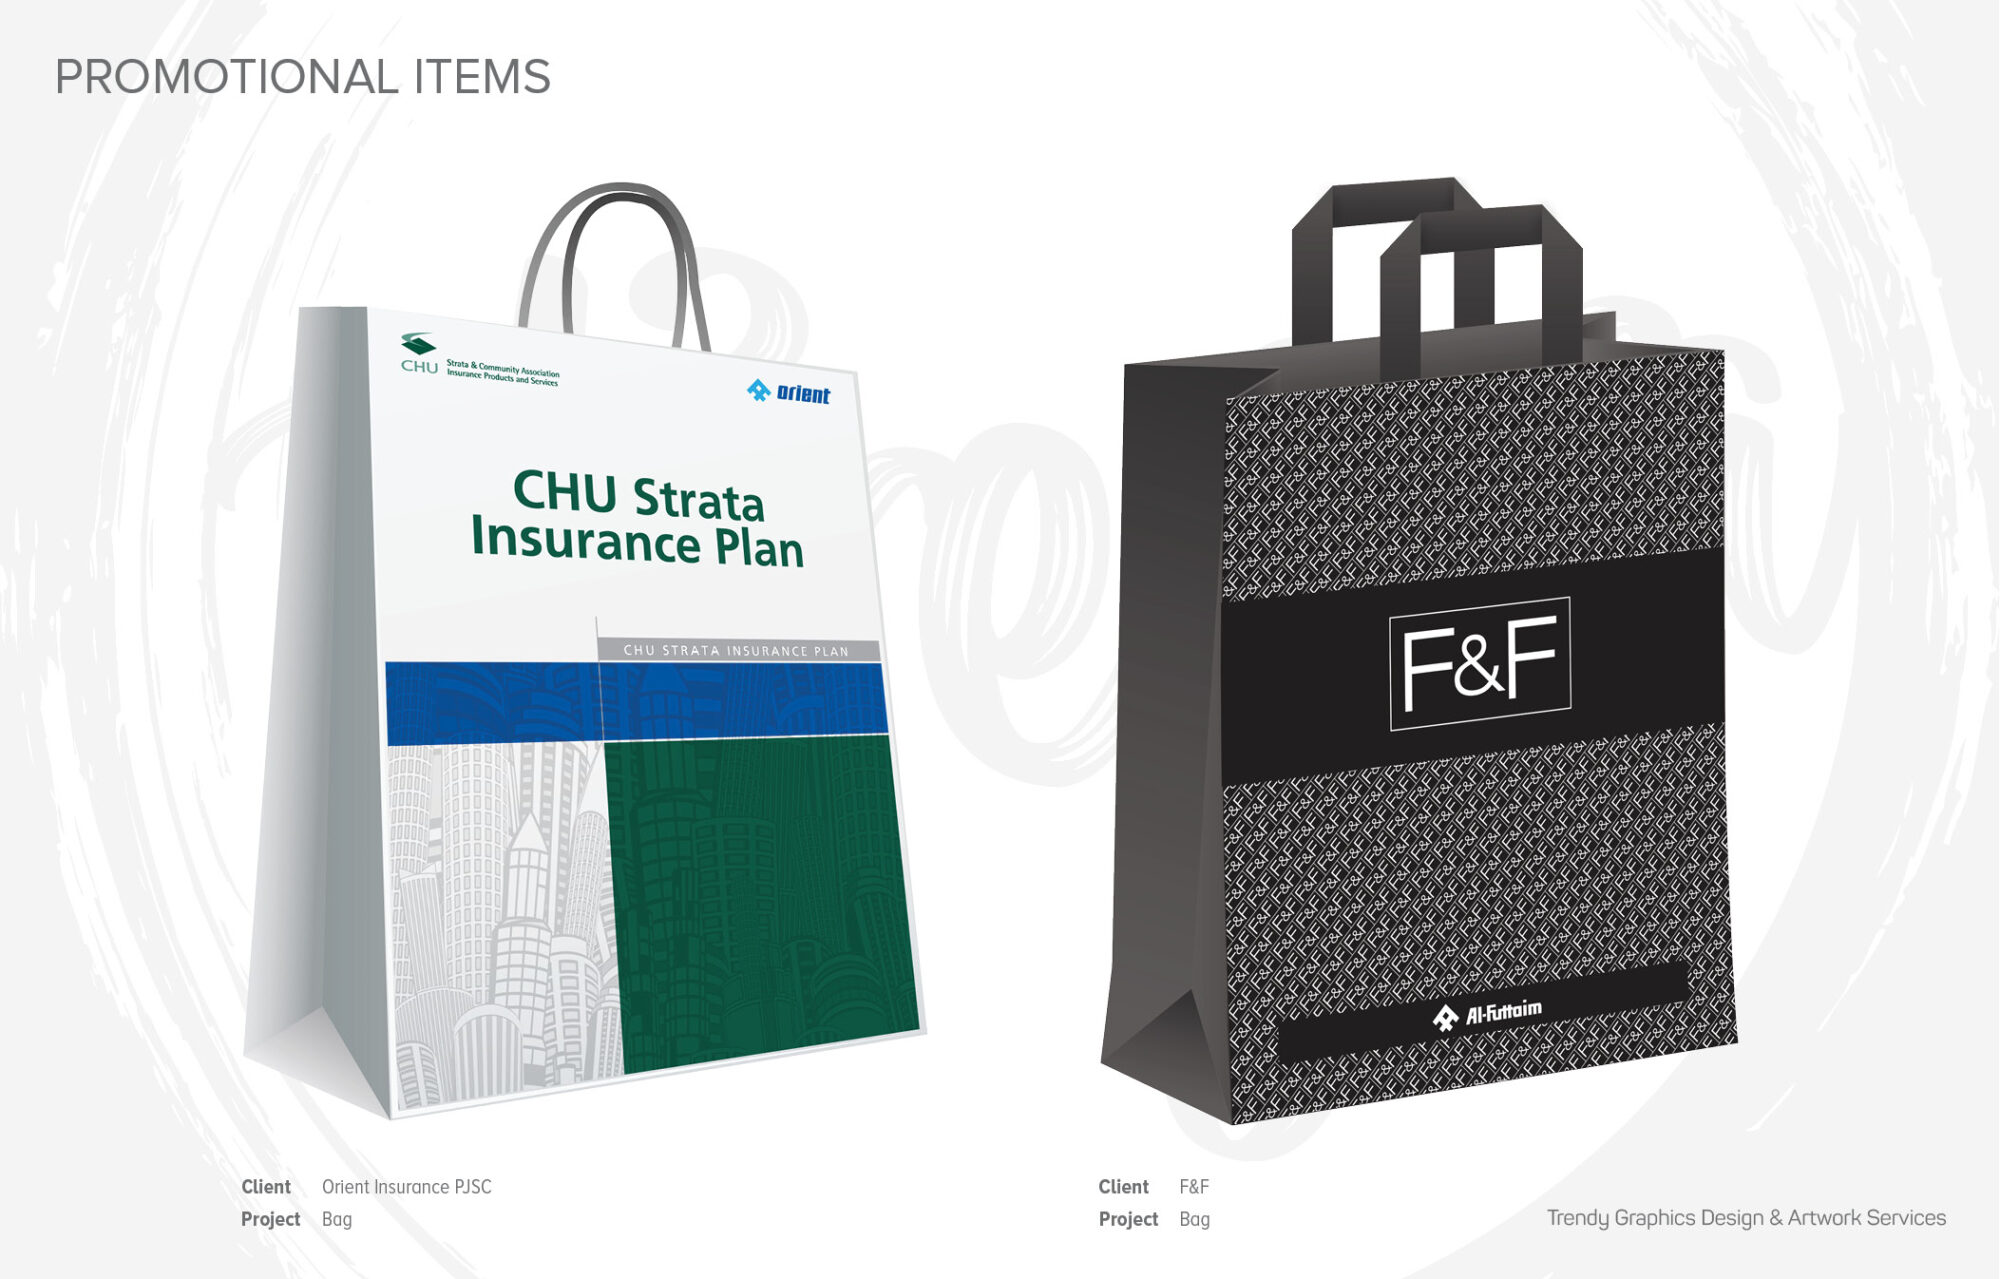 Orient Insurance PJSC – Bag, F&F – Bag